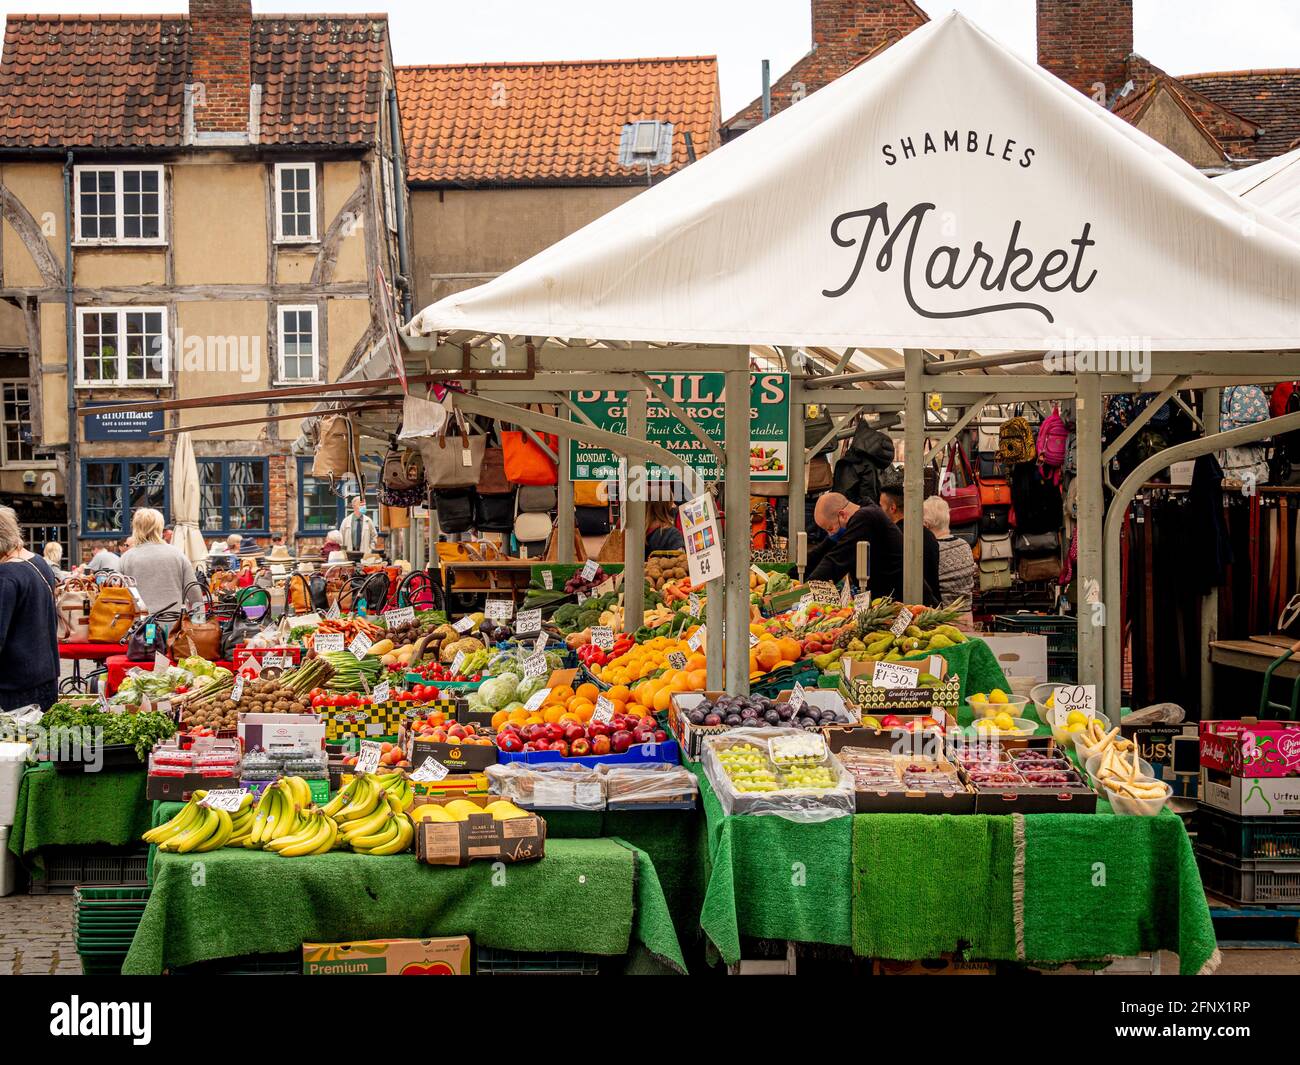 Fruit and vegetable stall at the Shambles Market, York, UK. Stock Photo